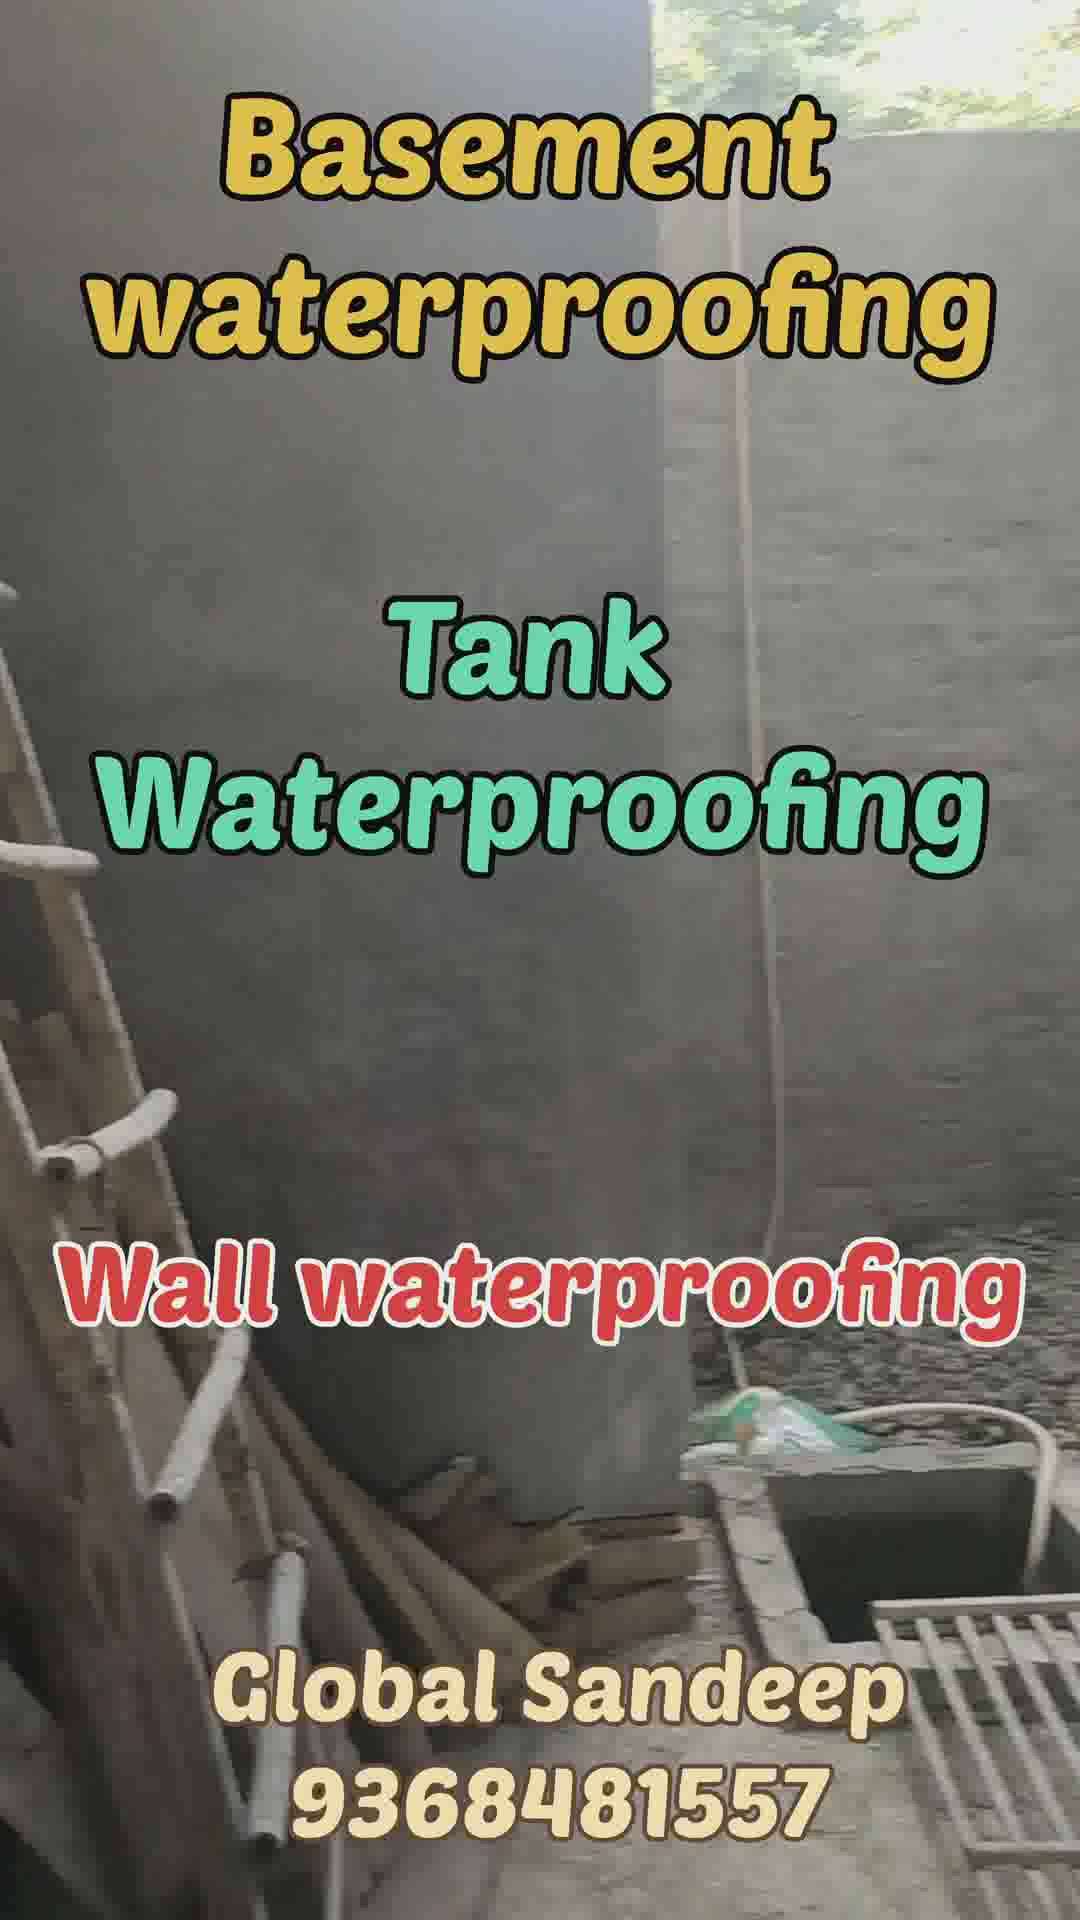 basement tank wall waterproofing treatment
#waterproofing
#delhi
#globalsandeep